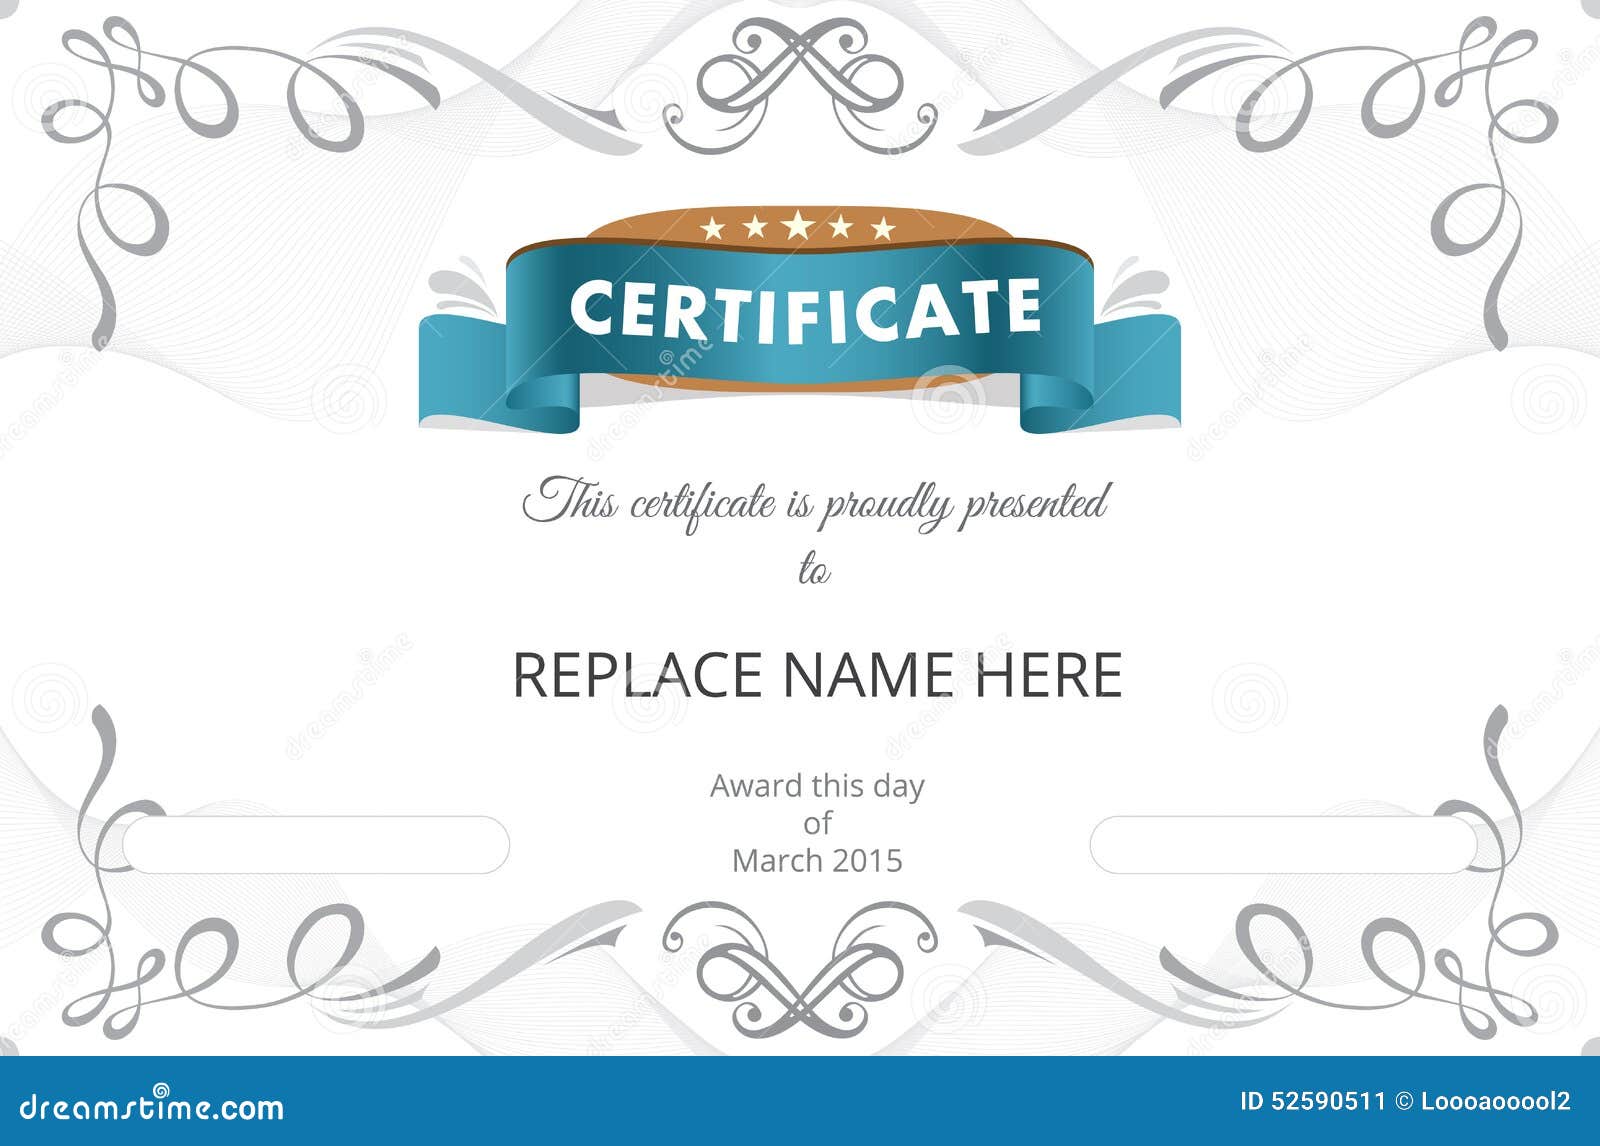 Certificate Border, Certificate Template. Vector Illustration